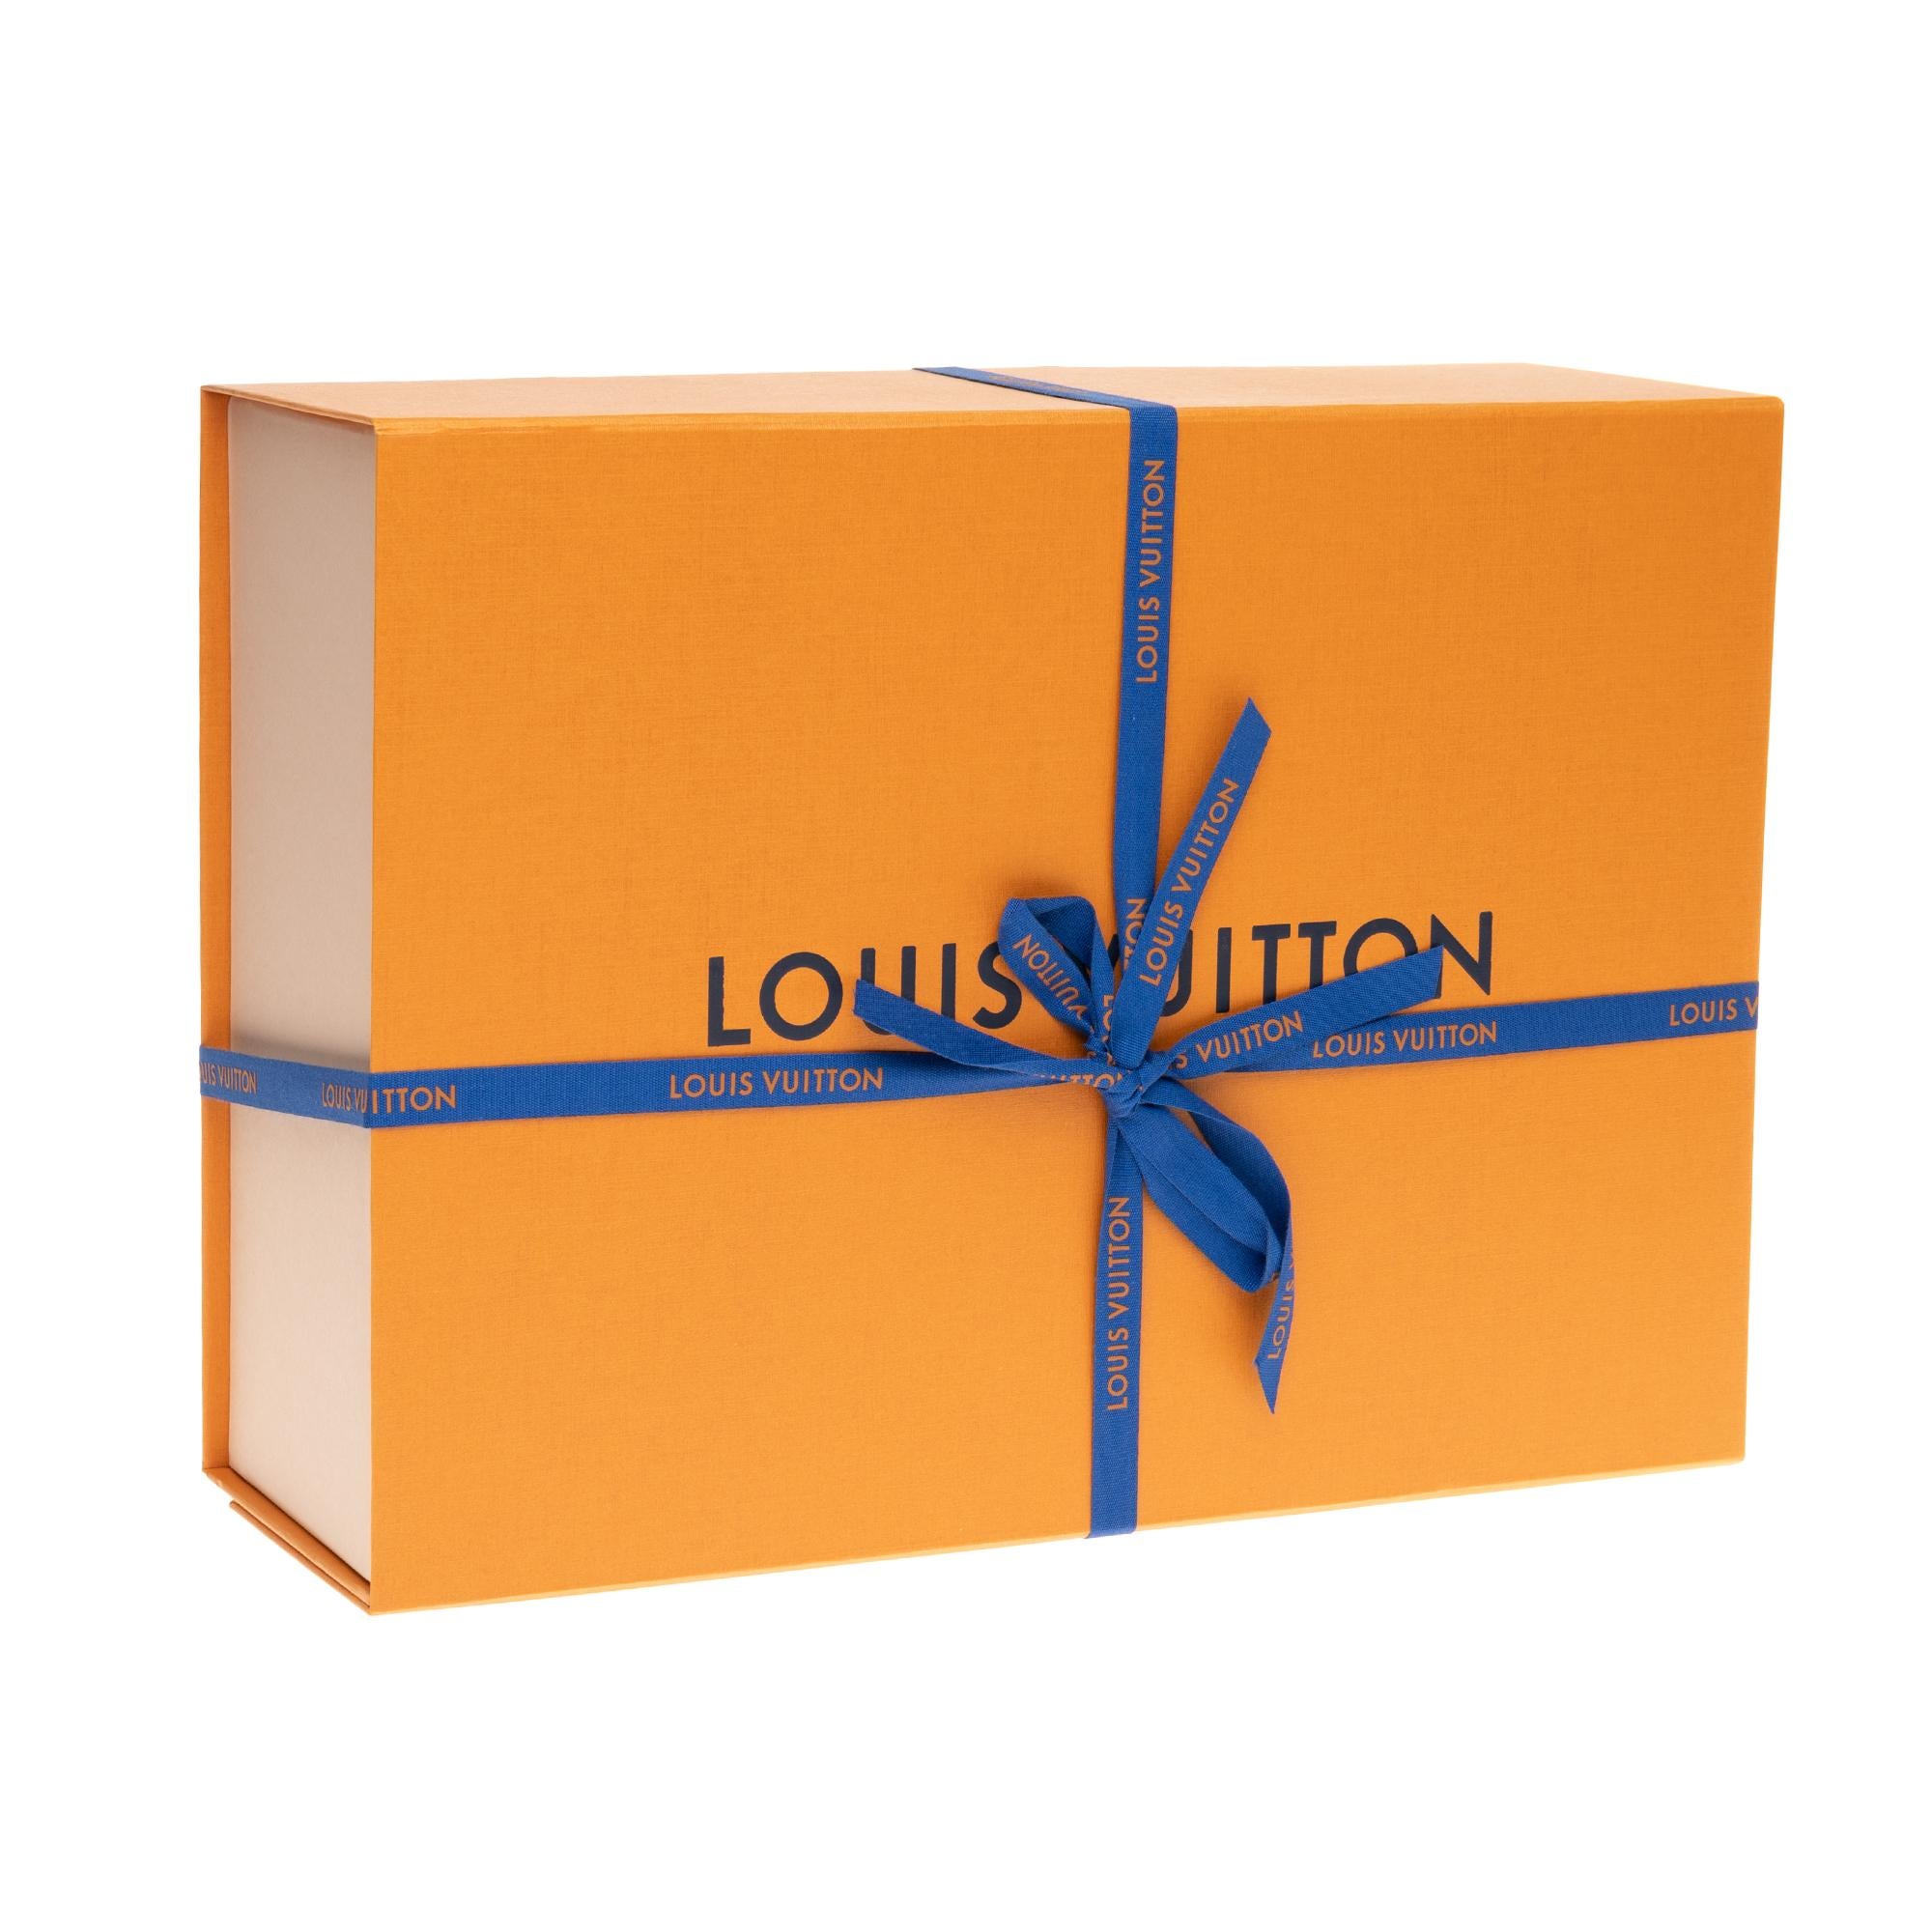 BRAND NEW ultra Limited Edition Louis Vuitton Twist Teddy Fleece MM handbag 5